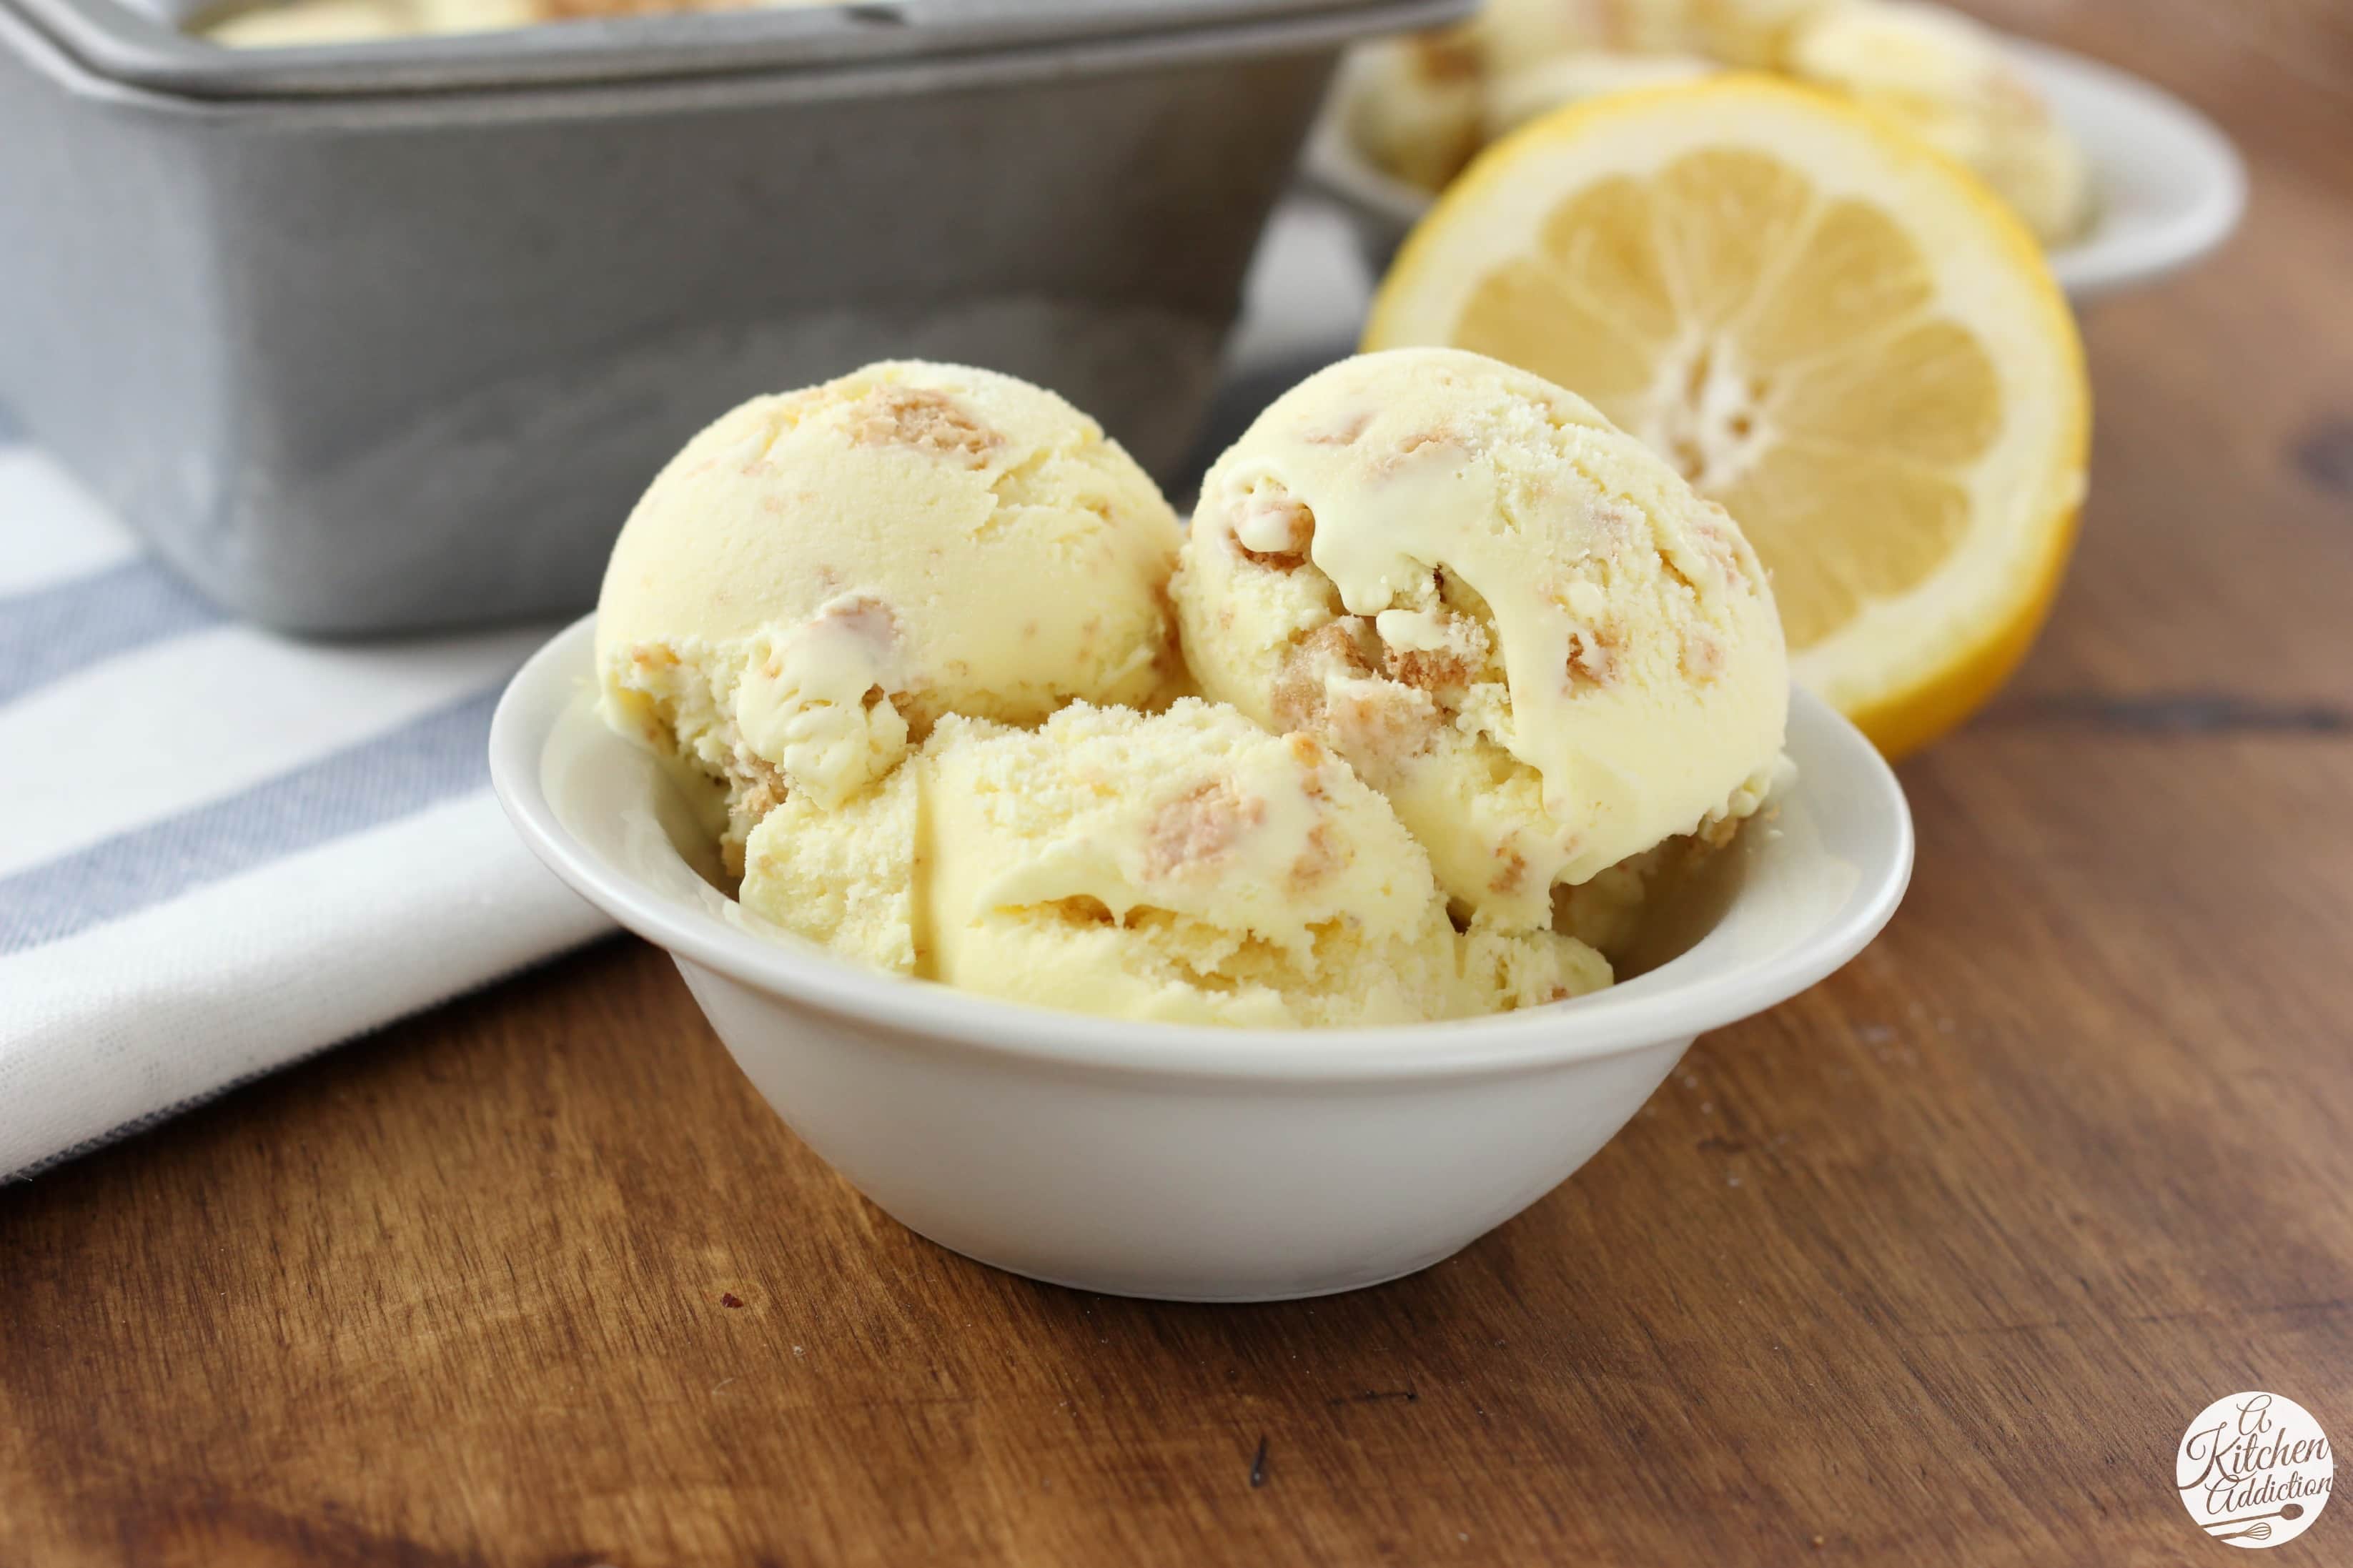 https://www.a-kitchen-addiction.com/wp-content/uploads/2014/07/lemon-crumb-ice-cream-w-name.jpg